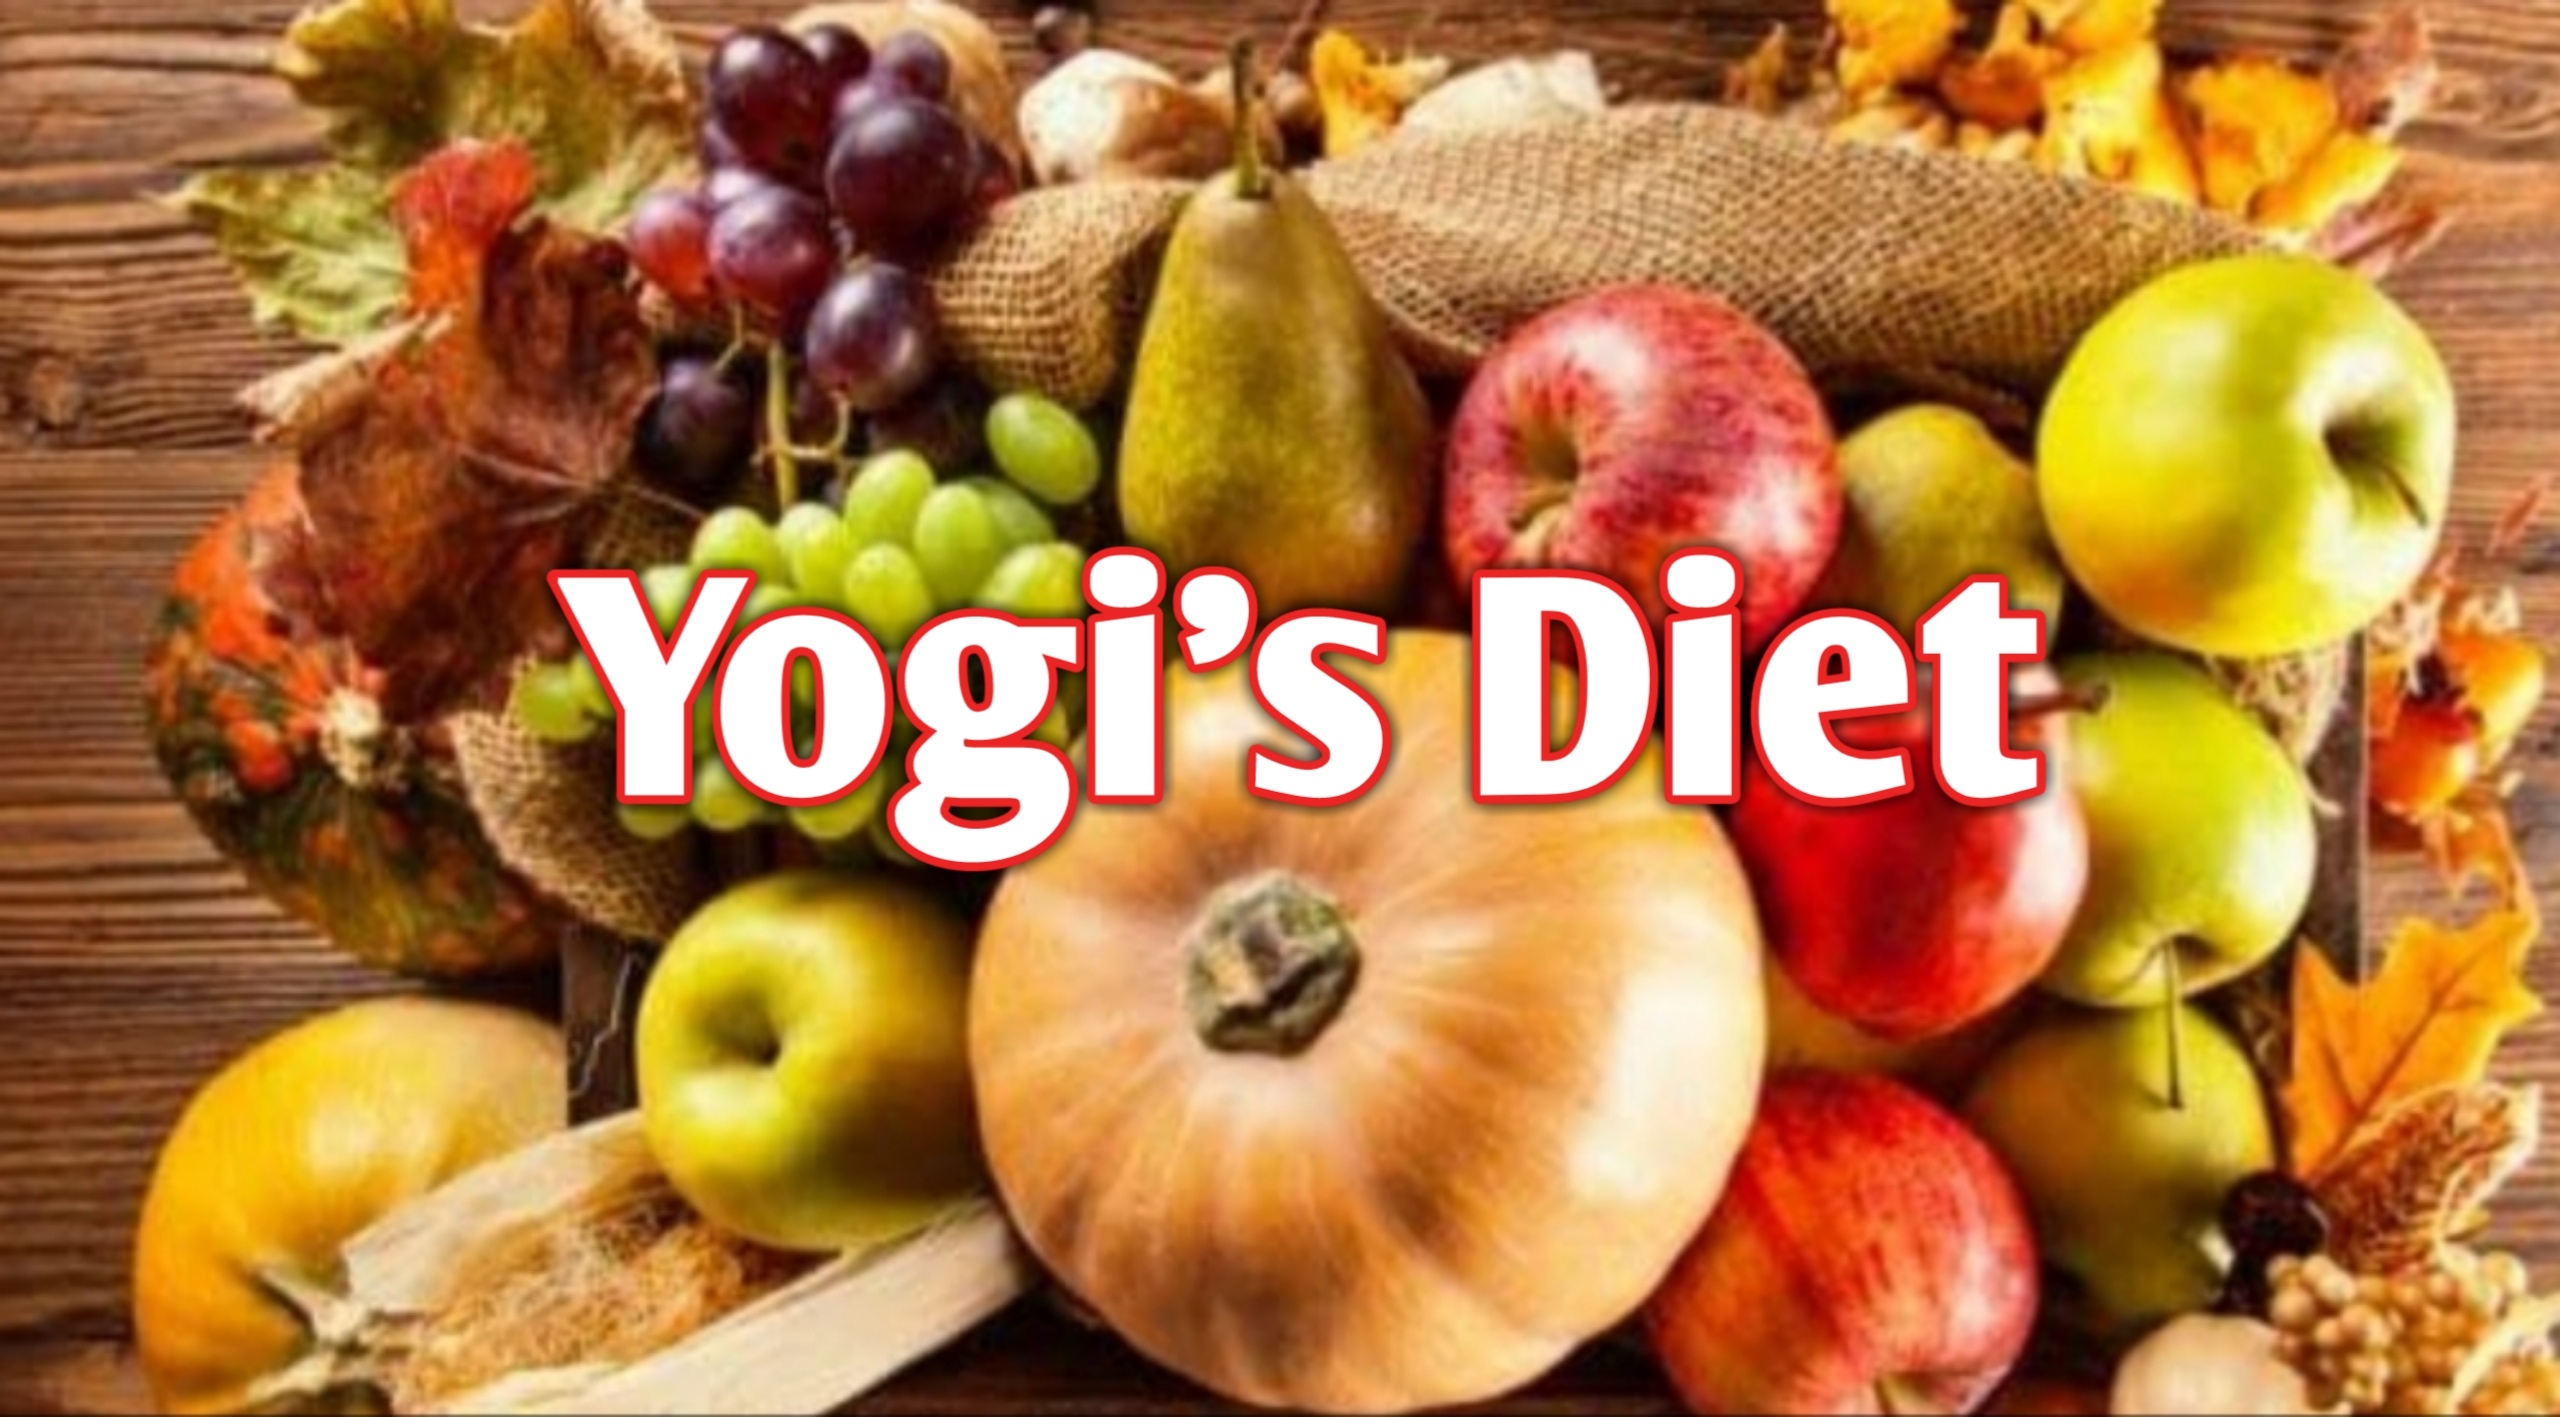 Yogi’s Diet